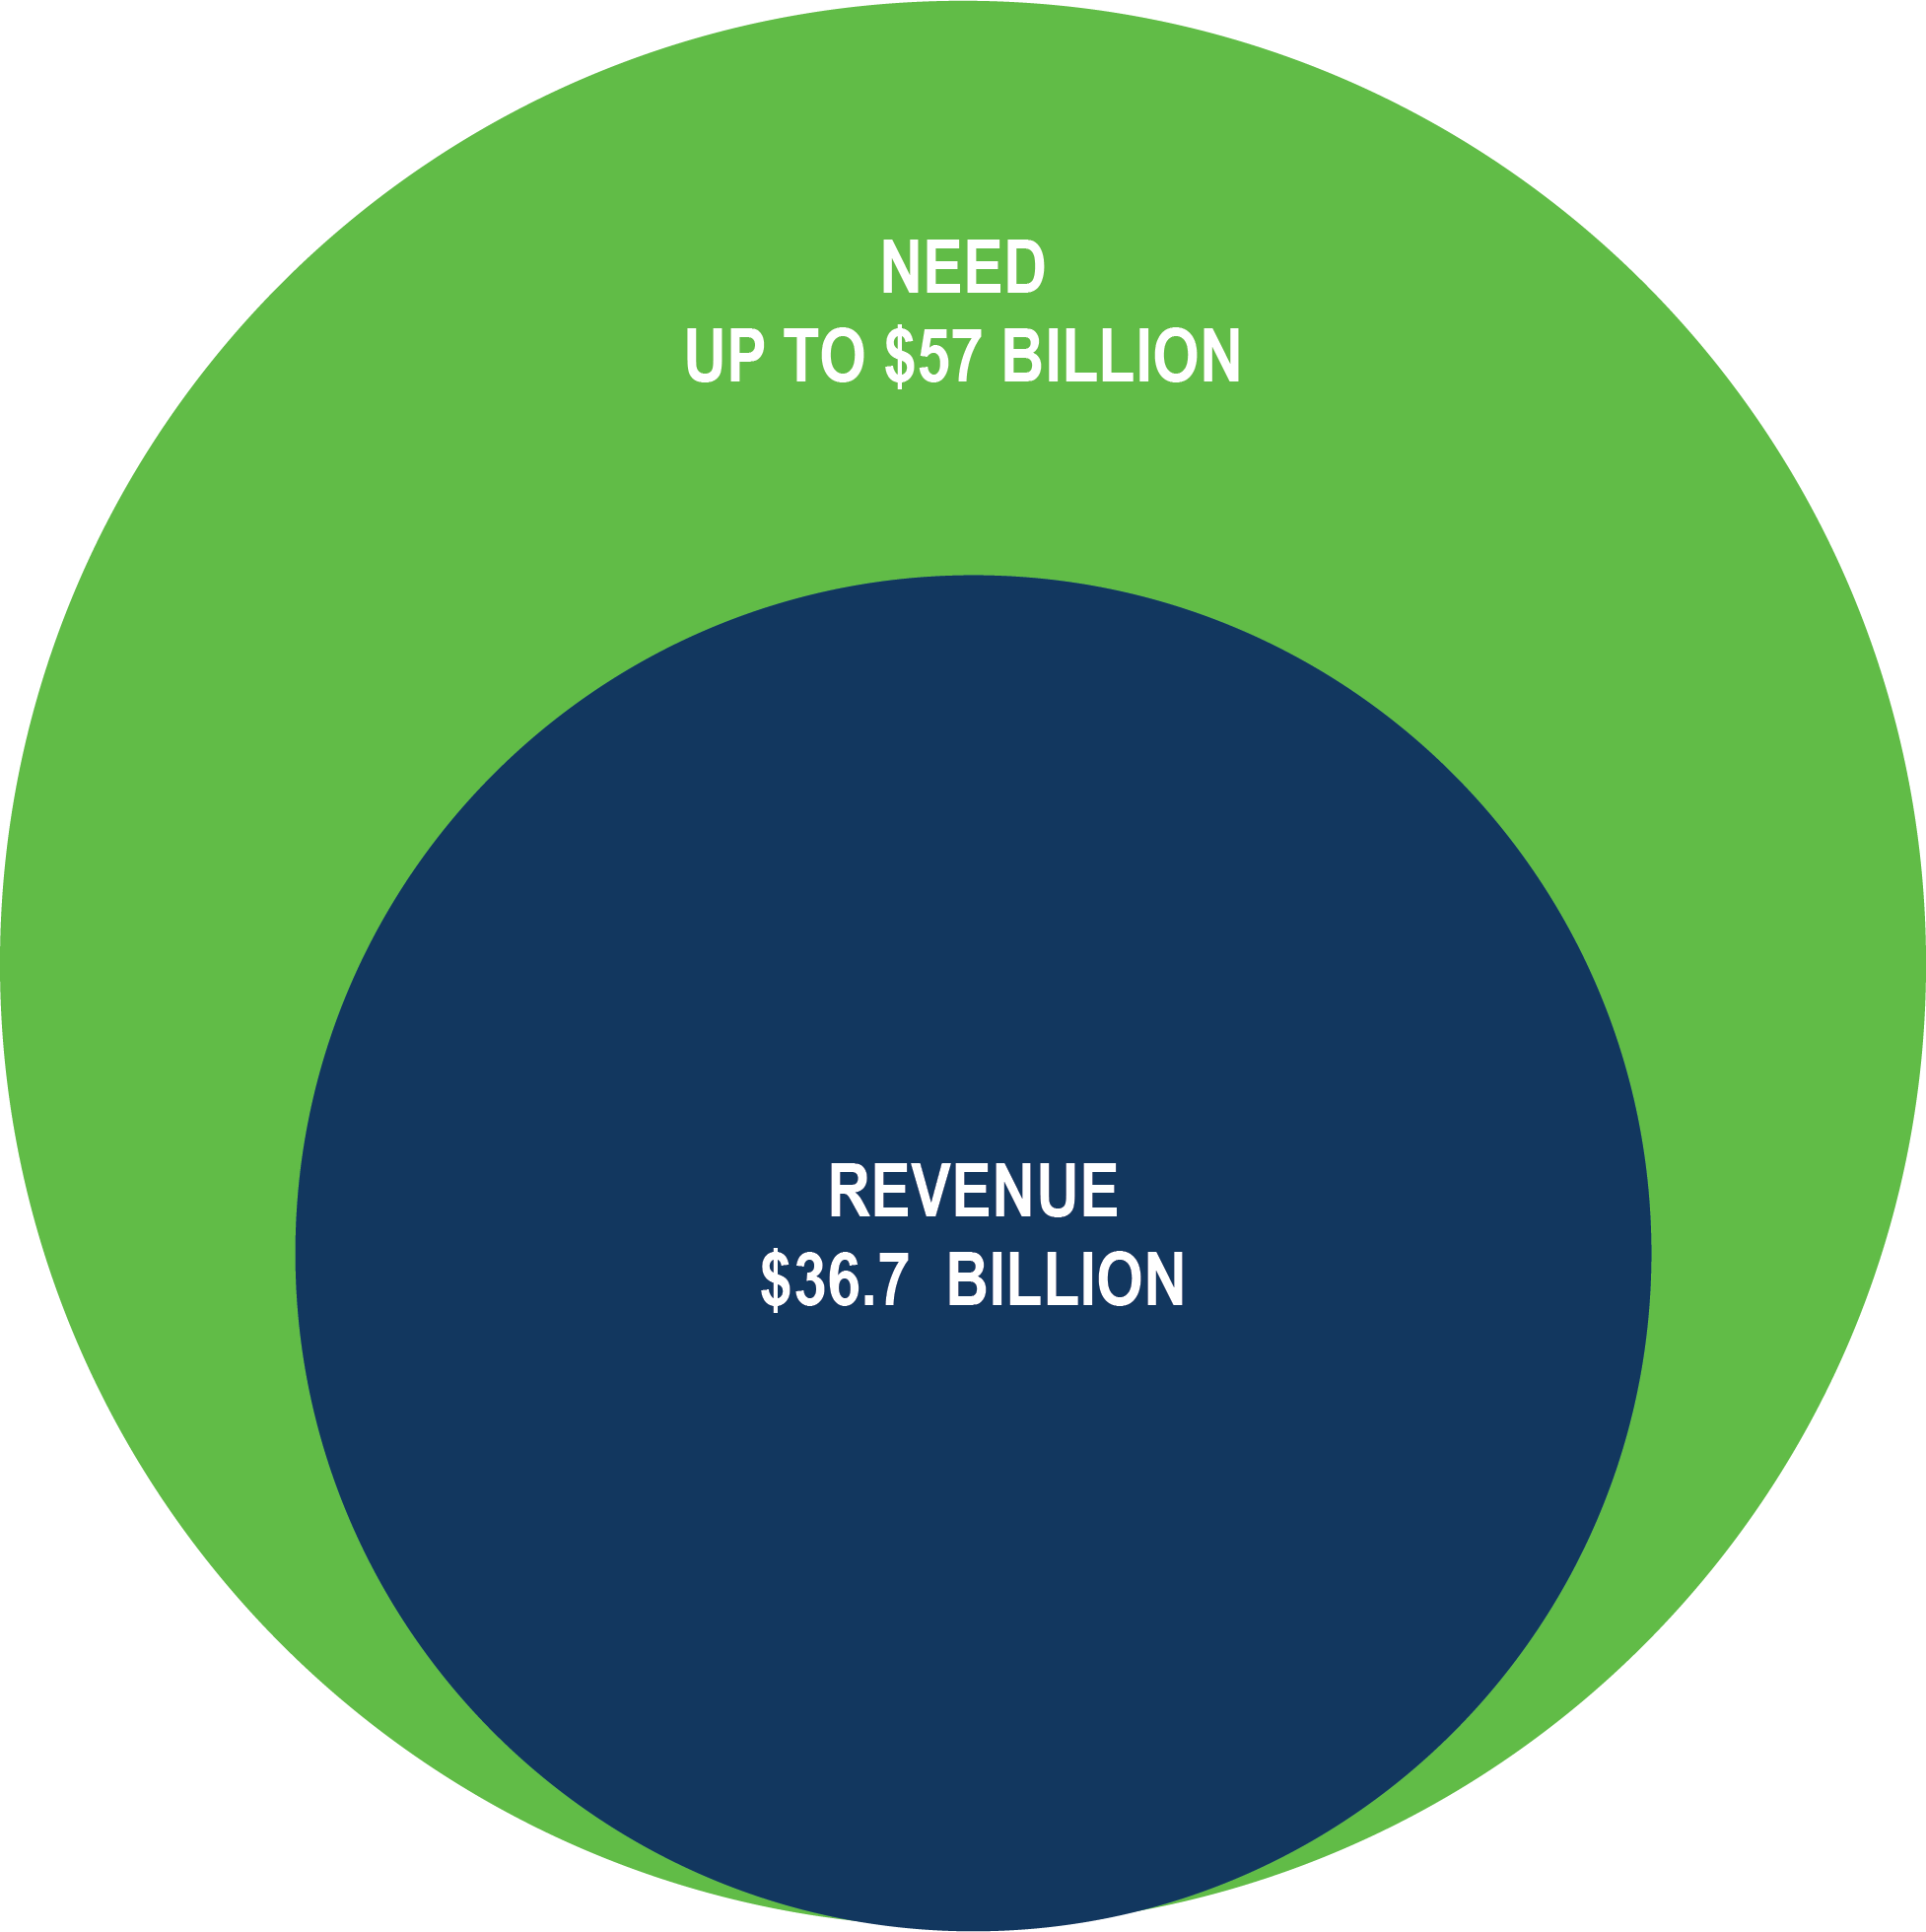 The Comparison shows the Revenue of $36.8 Billion inside the Need of $57 Billion.